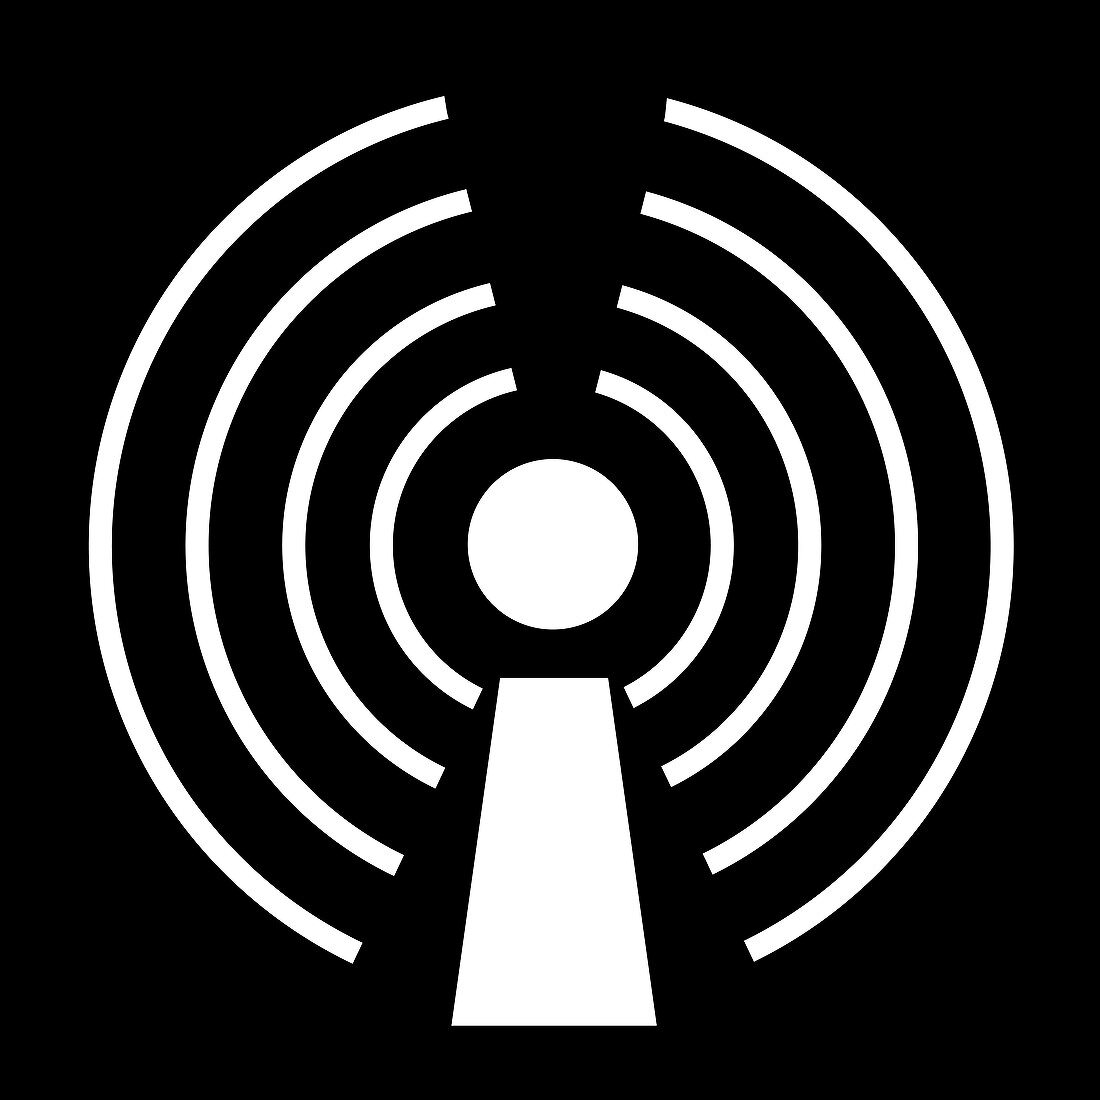 Wireless internet symbol